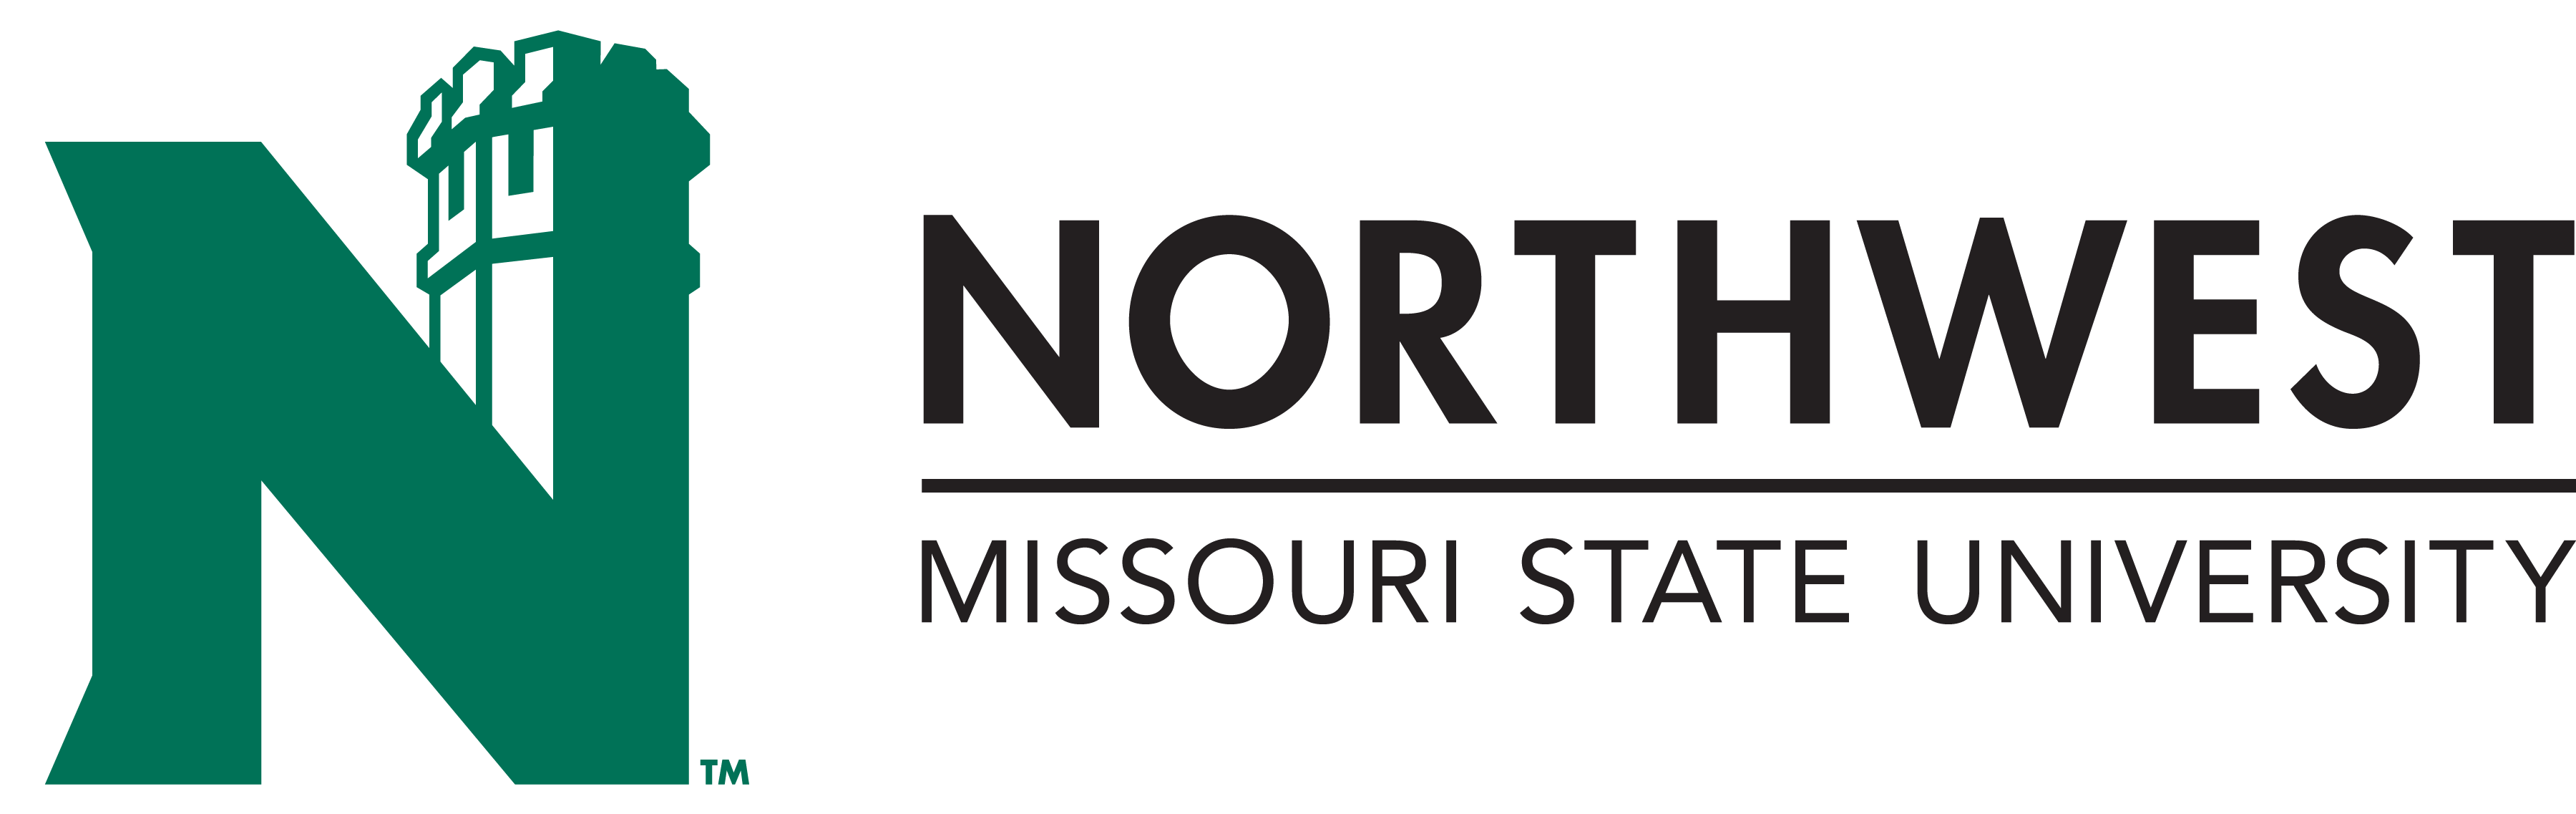 Northwest missouri state logo